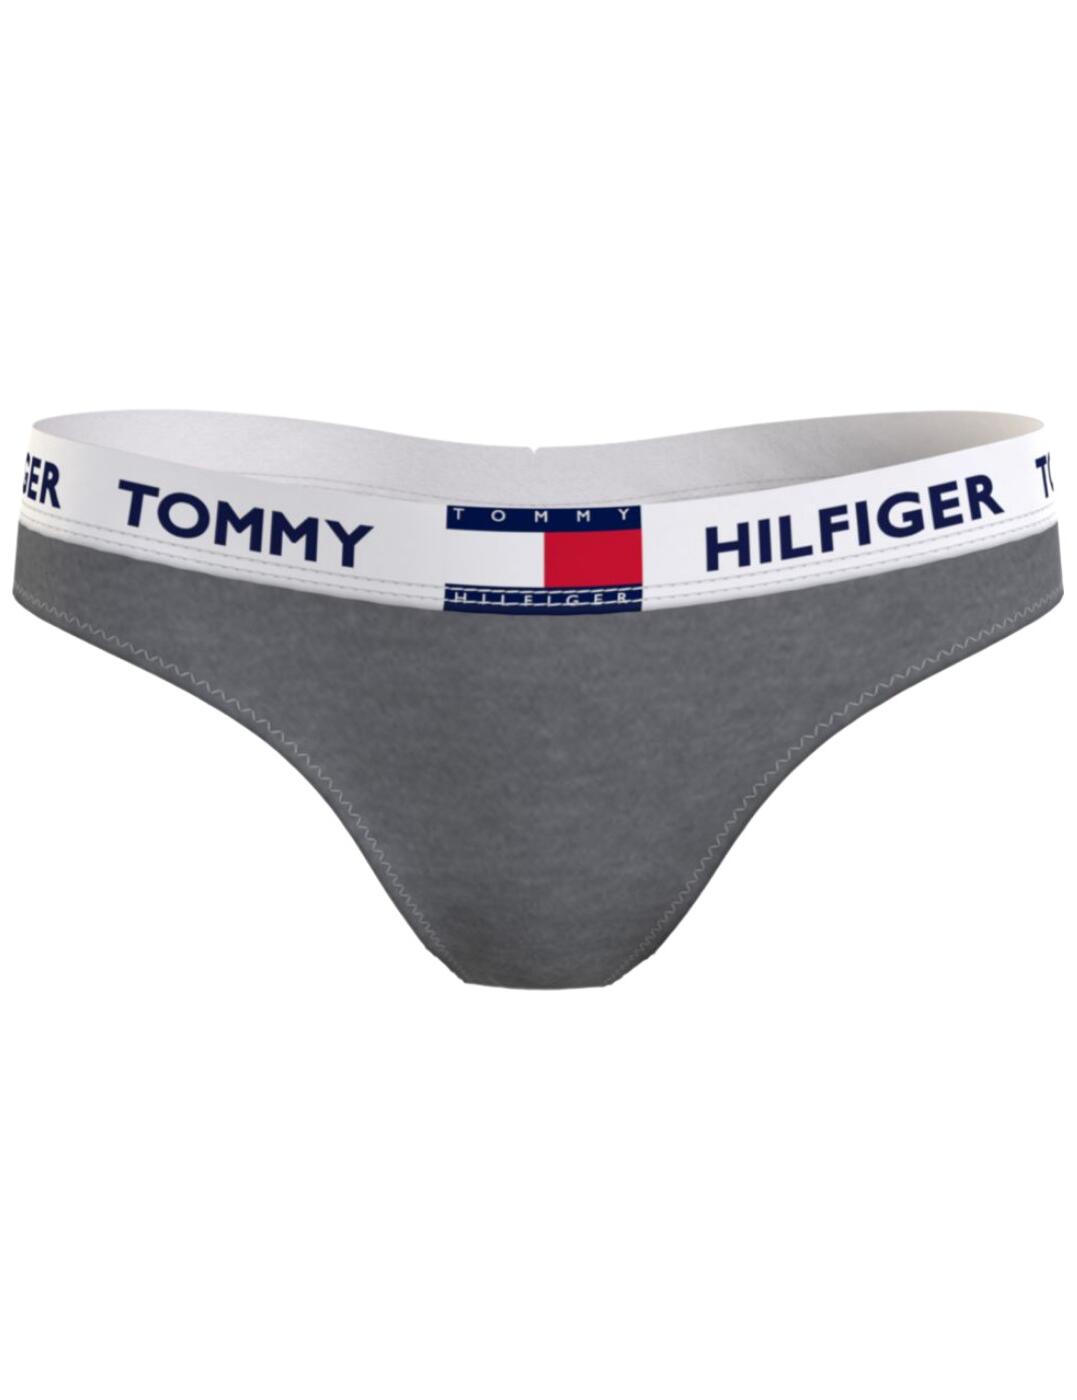 Tommy Hilfiger Hilfiger Classic Thong - Belle Lingerie